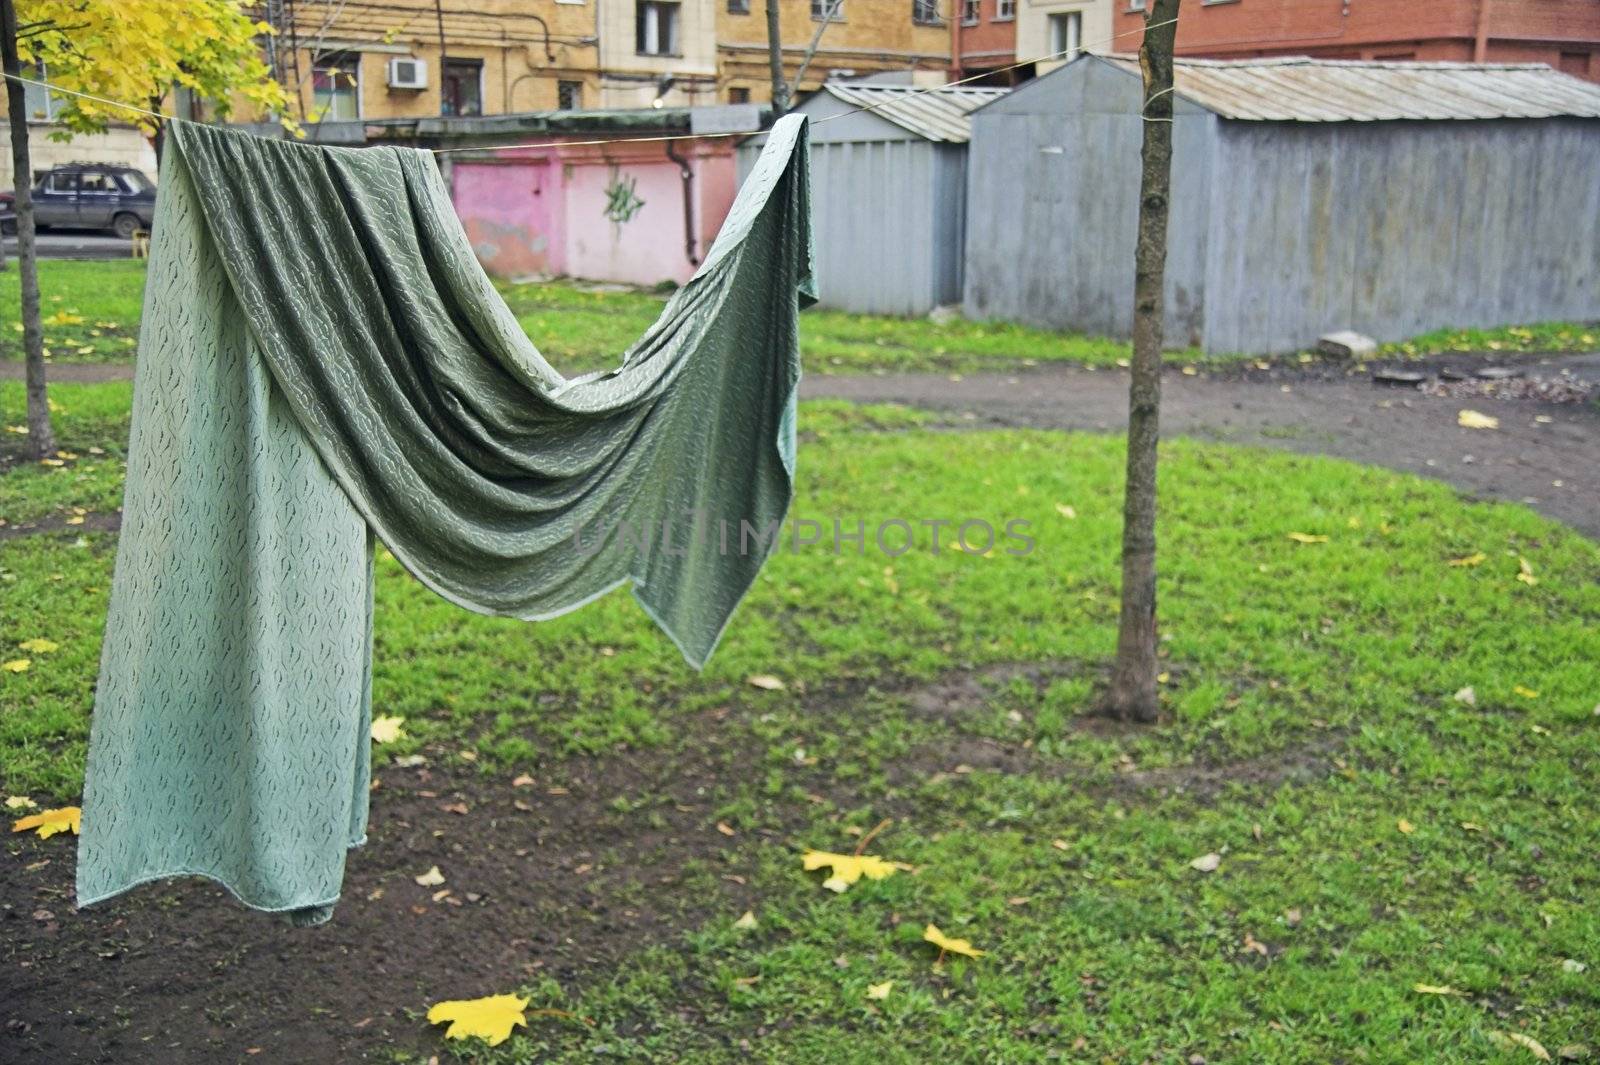 Curtain drying on string in backyard by simfan